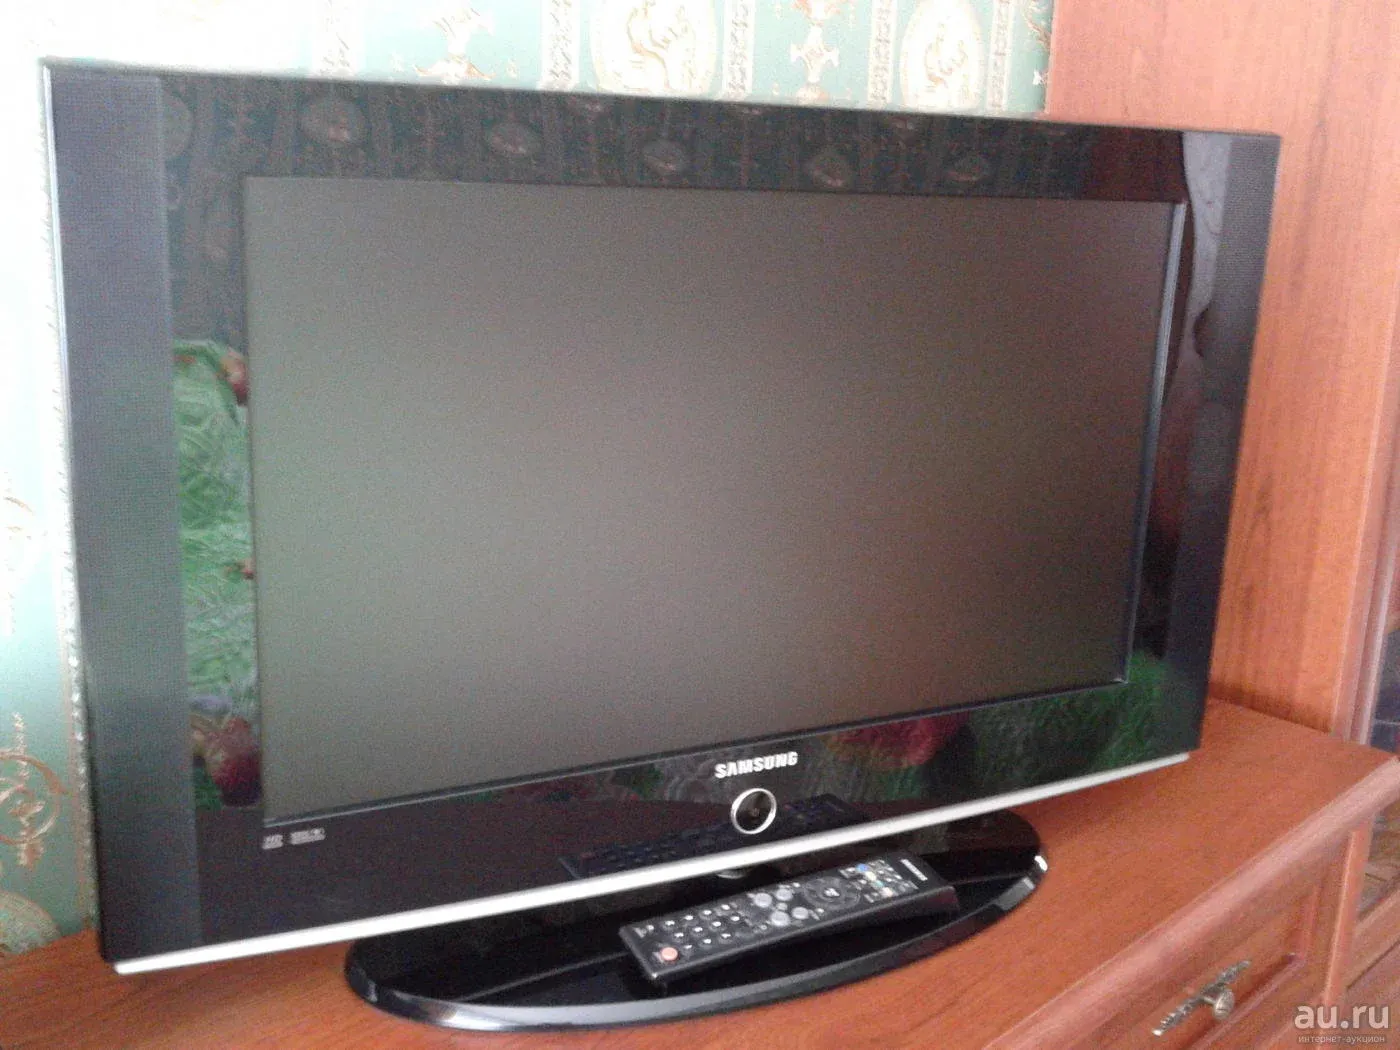 Продам телевизор самсунг. Samsung le26s81b. Телевизор Samsung le-26b450. Телевизор le37s81b Samsung. Телевизор самсунг le26s81bs/ELD.